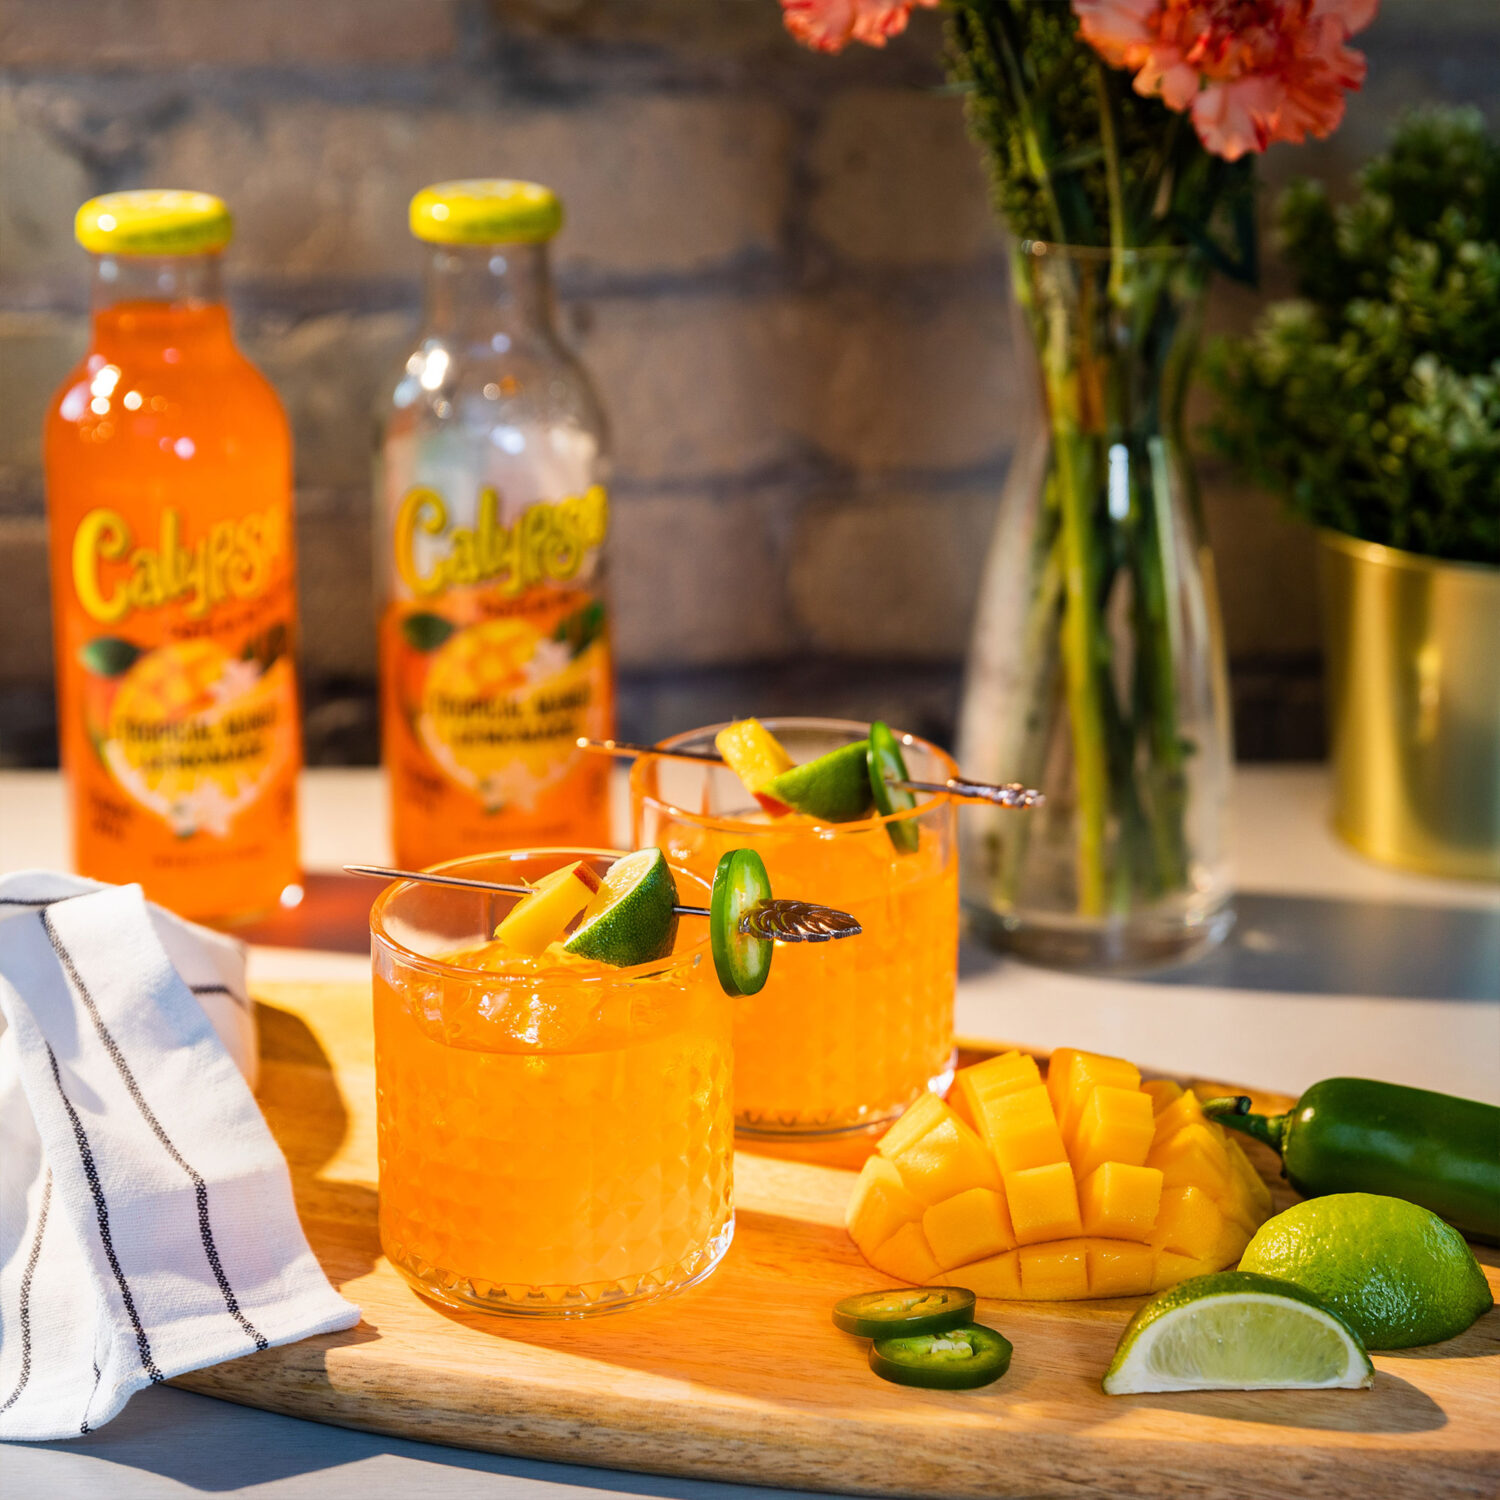 A cocktail of Calypso Tropical Mango Lemonade and cut up mango on a cutting board.